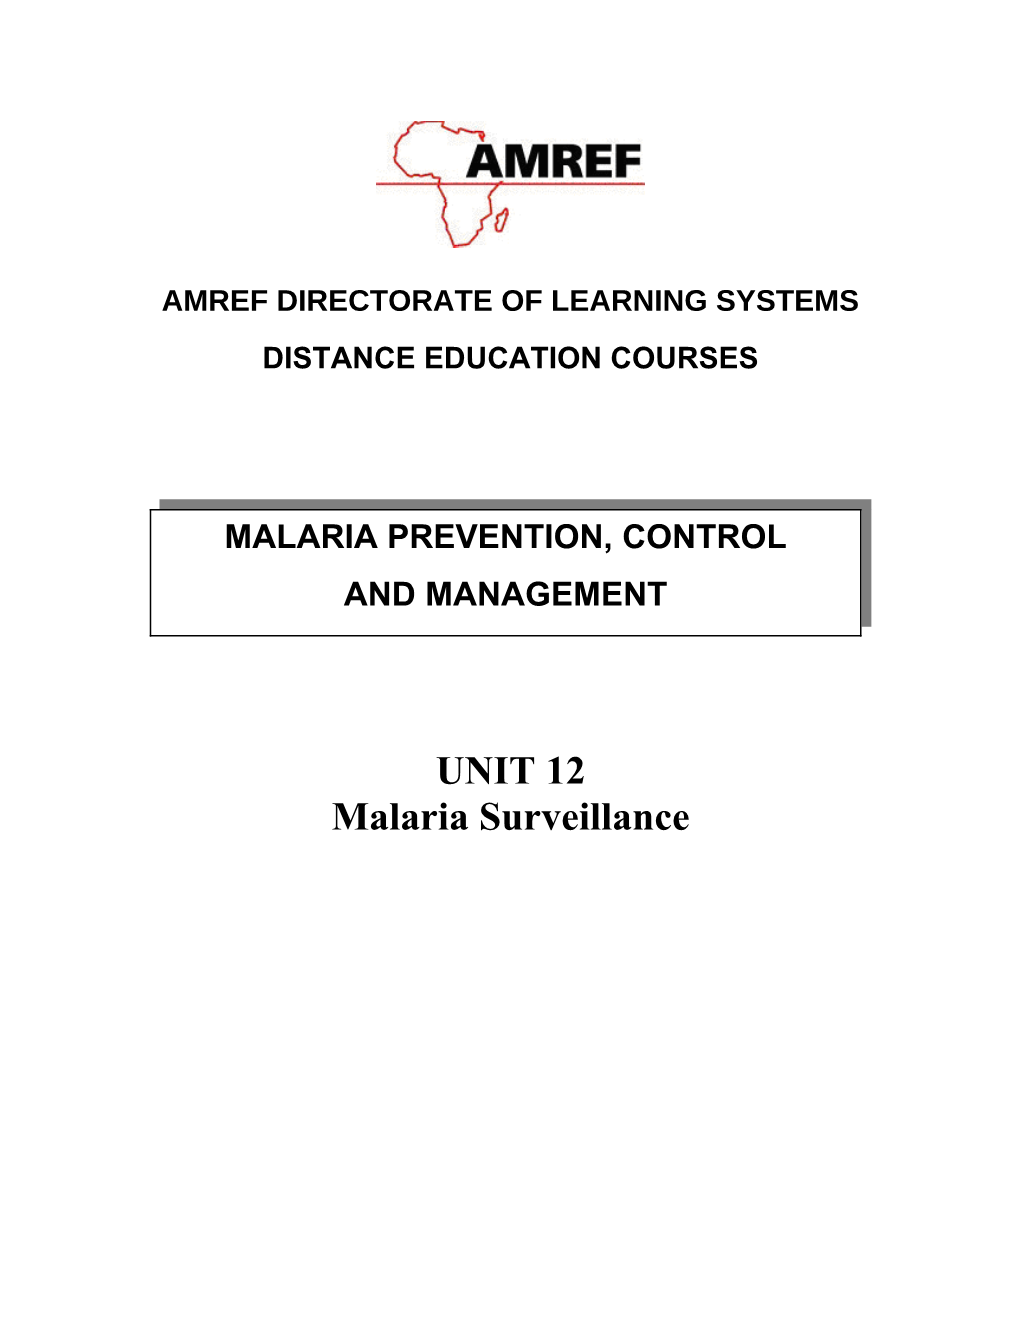 Unit 12: Malaria Surveillance